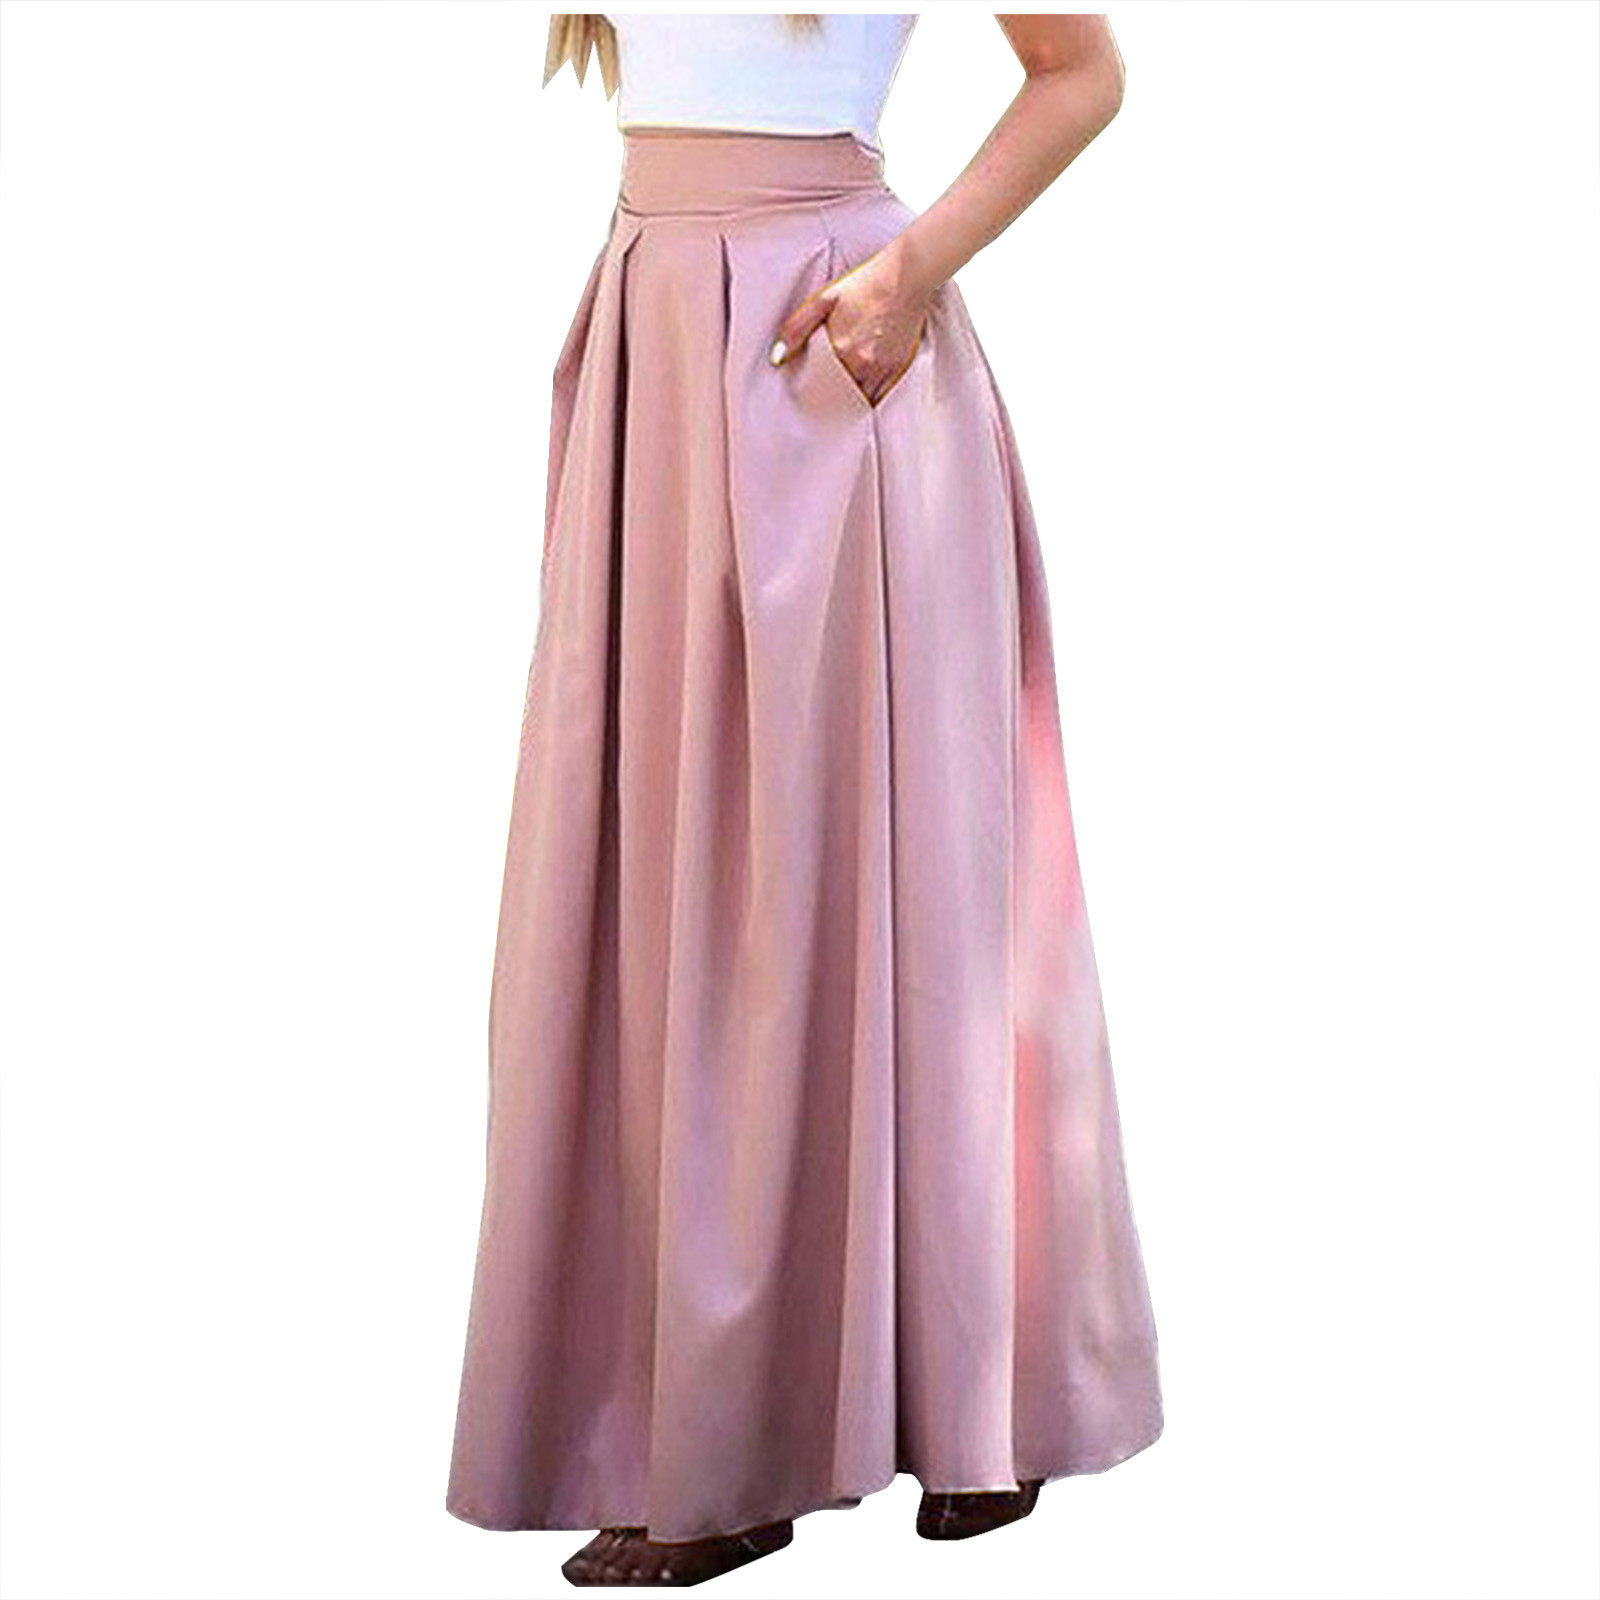 JWZUY Women's High Waist Flared Skirt Pleated Maxi Skirt with Pocket ...